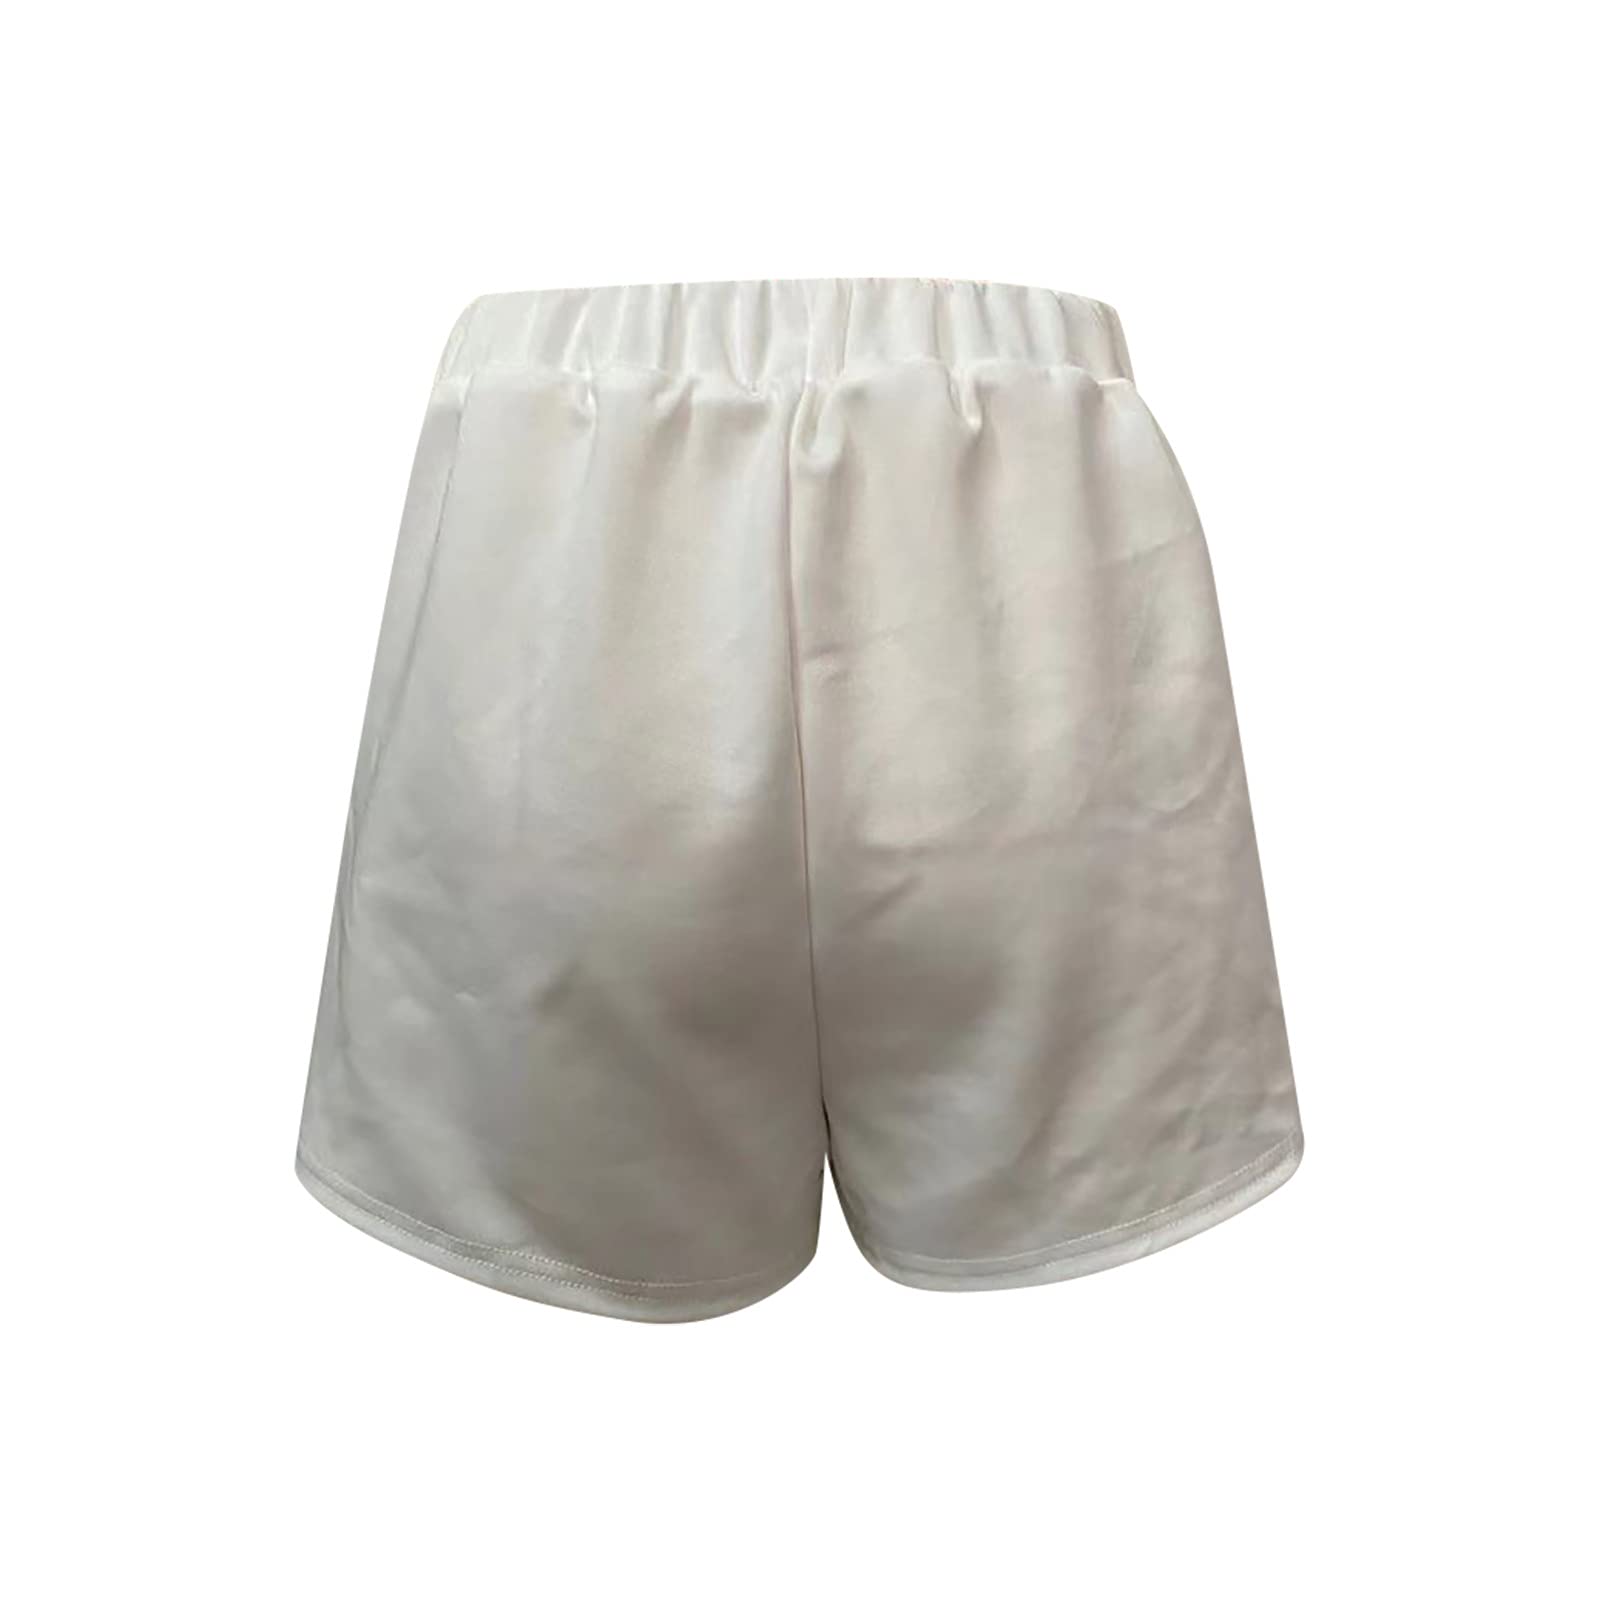 Bravetoshop Women's Lounge Shorts with Pockets Athletic Running Shorts Elastic Waist Comfy Workout Yoga Beach Shorts (White,S)